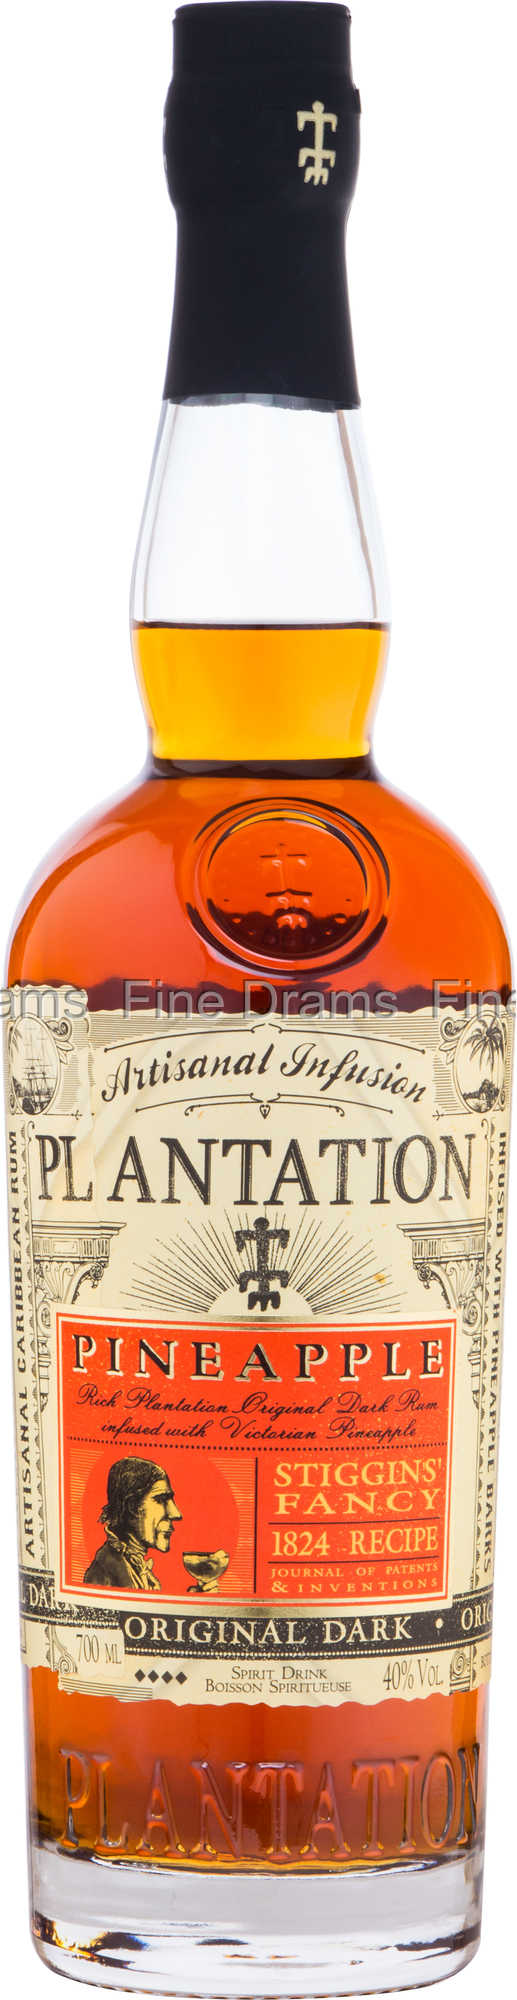 Plantation Pineapple Stiggins\' Rum Fancy